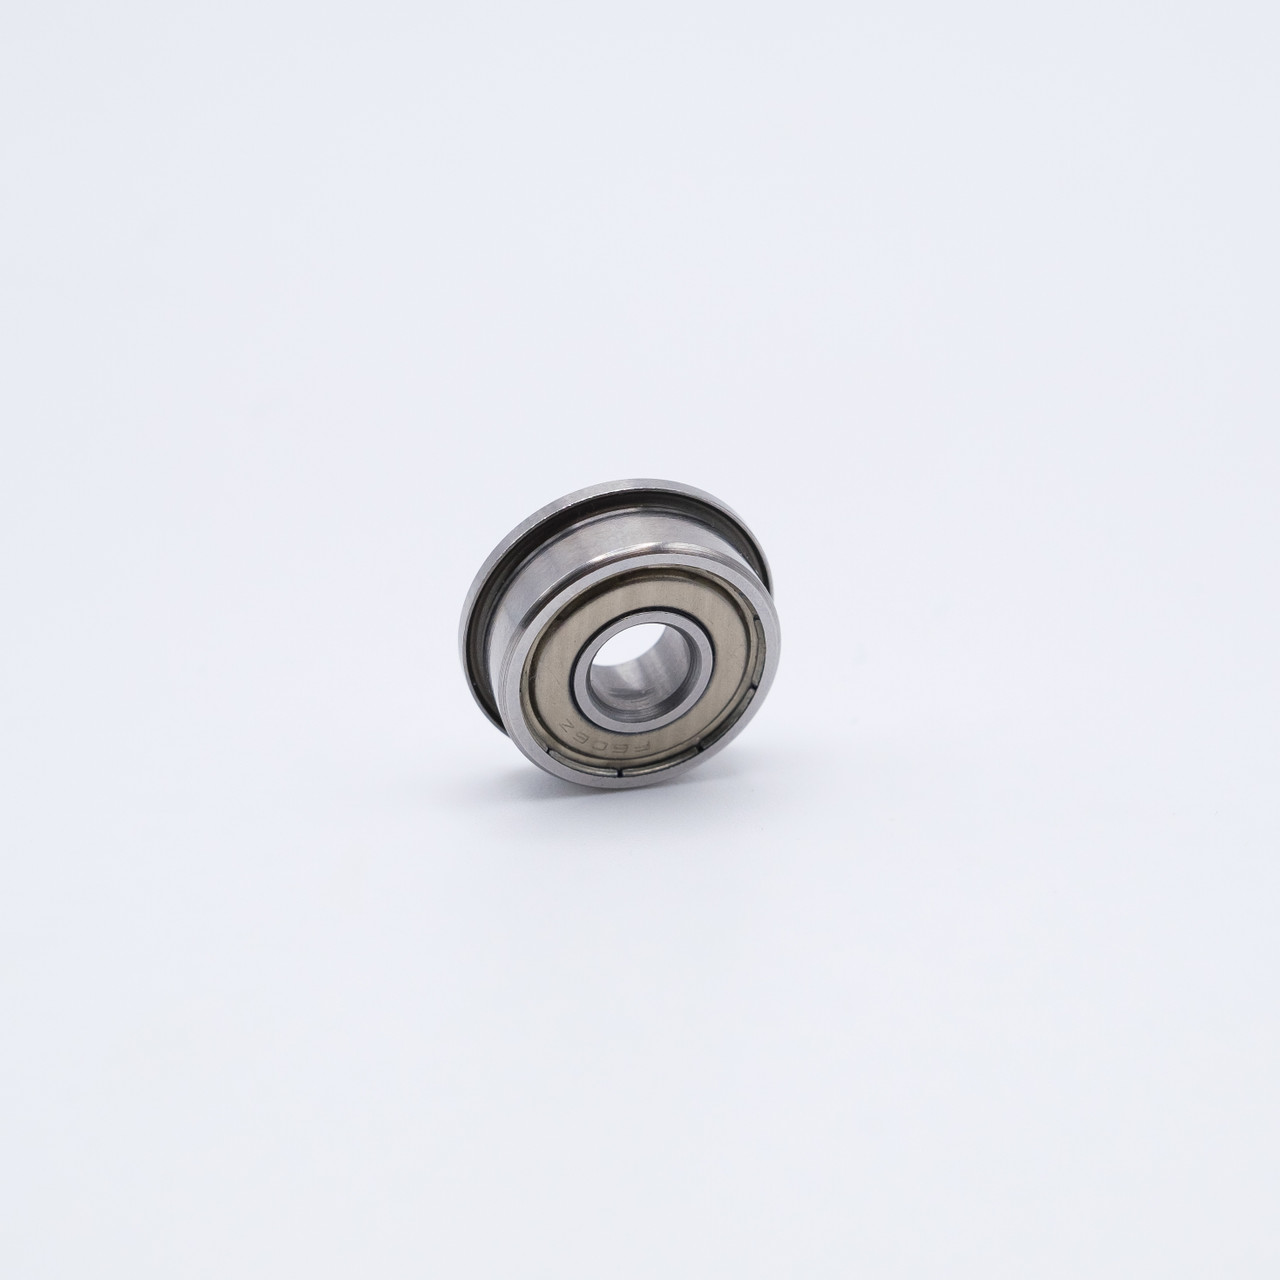 MF104-ZZ Miniature Flange Ball Bearing 4x10x4mm Side View